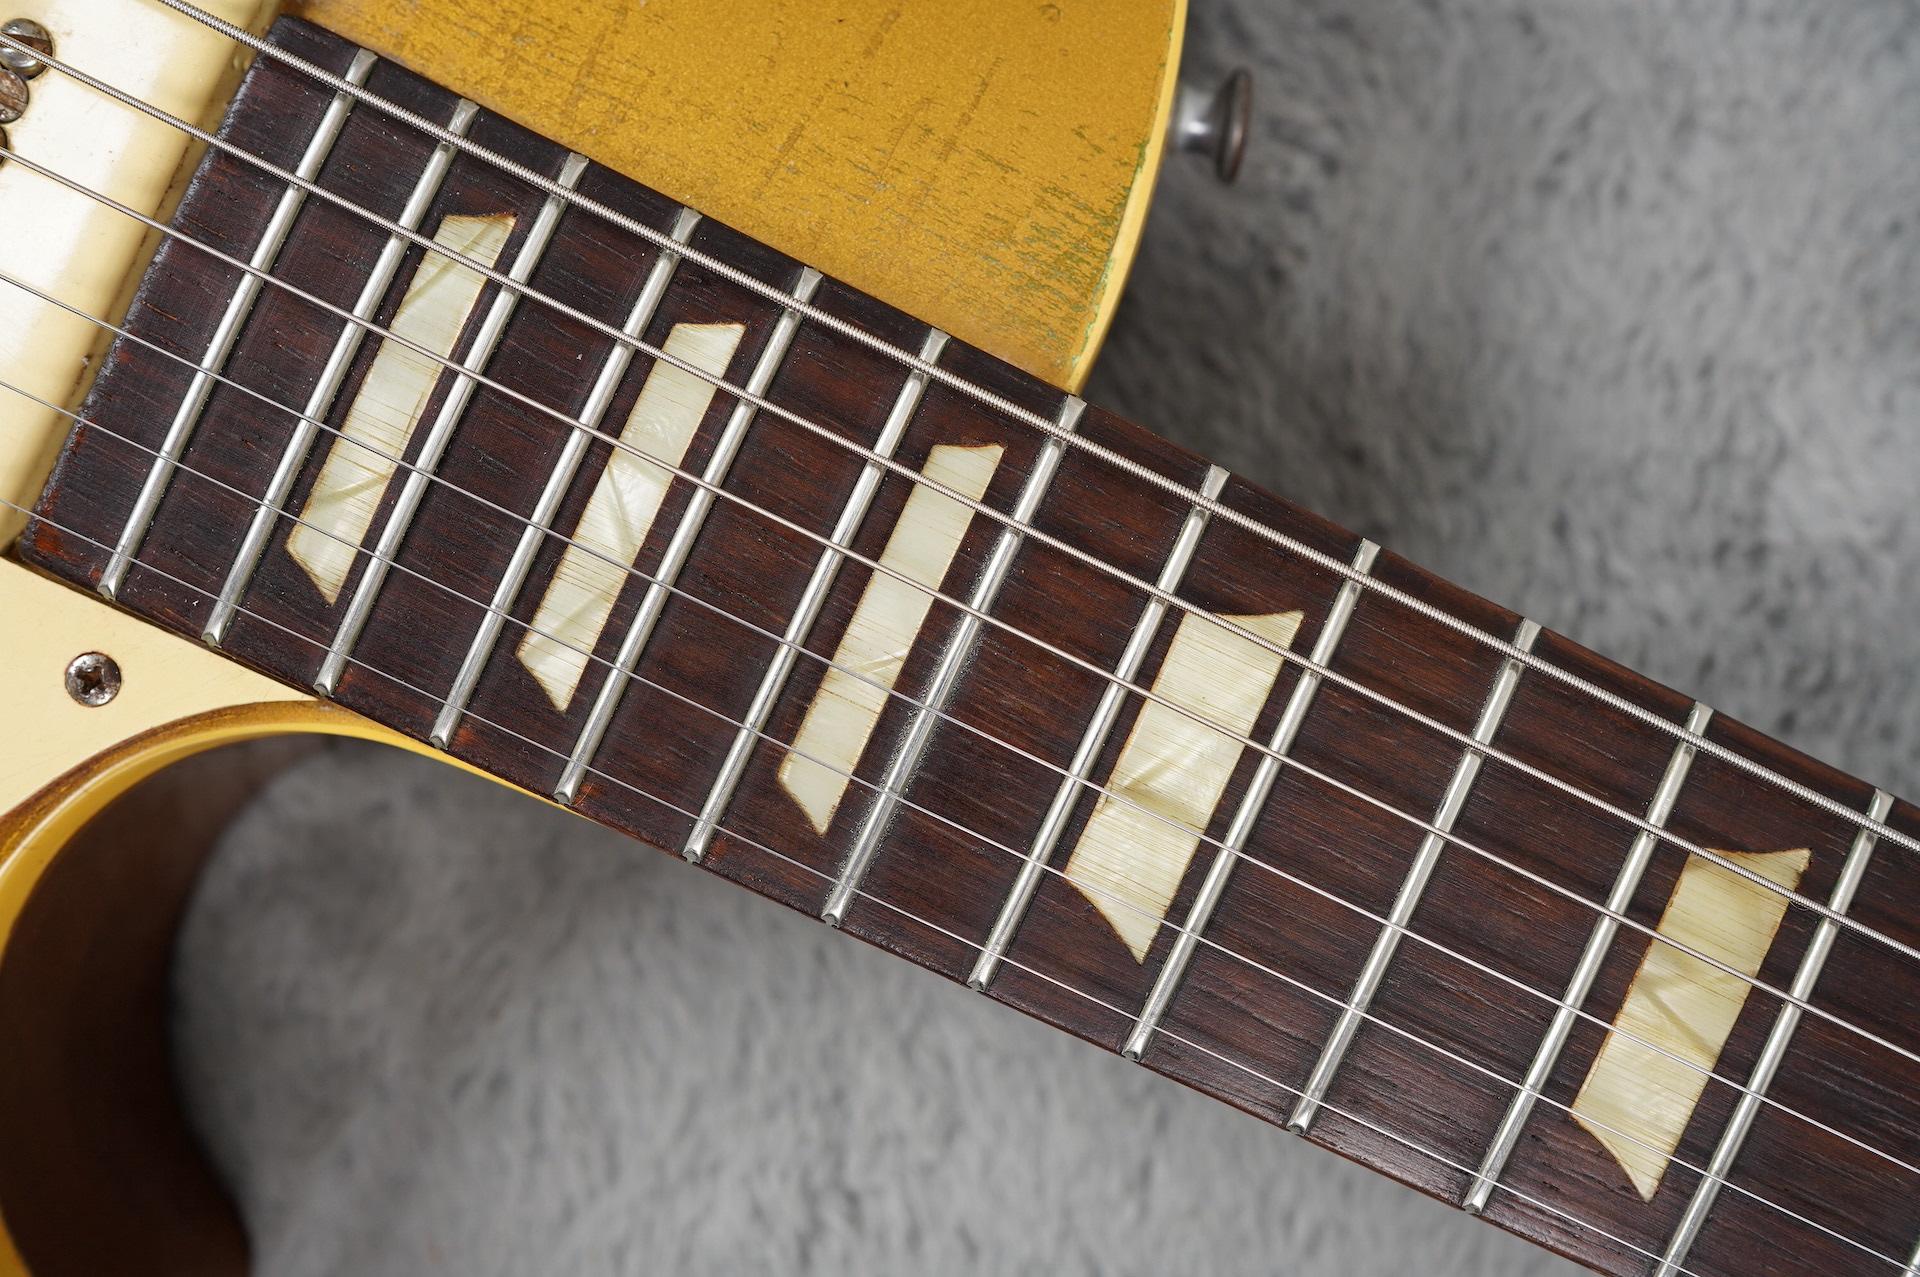 1952 Gibson Les Paul Standard Goldtop unbound Neck + OHSC